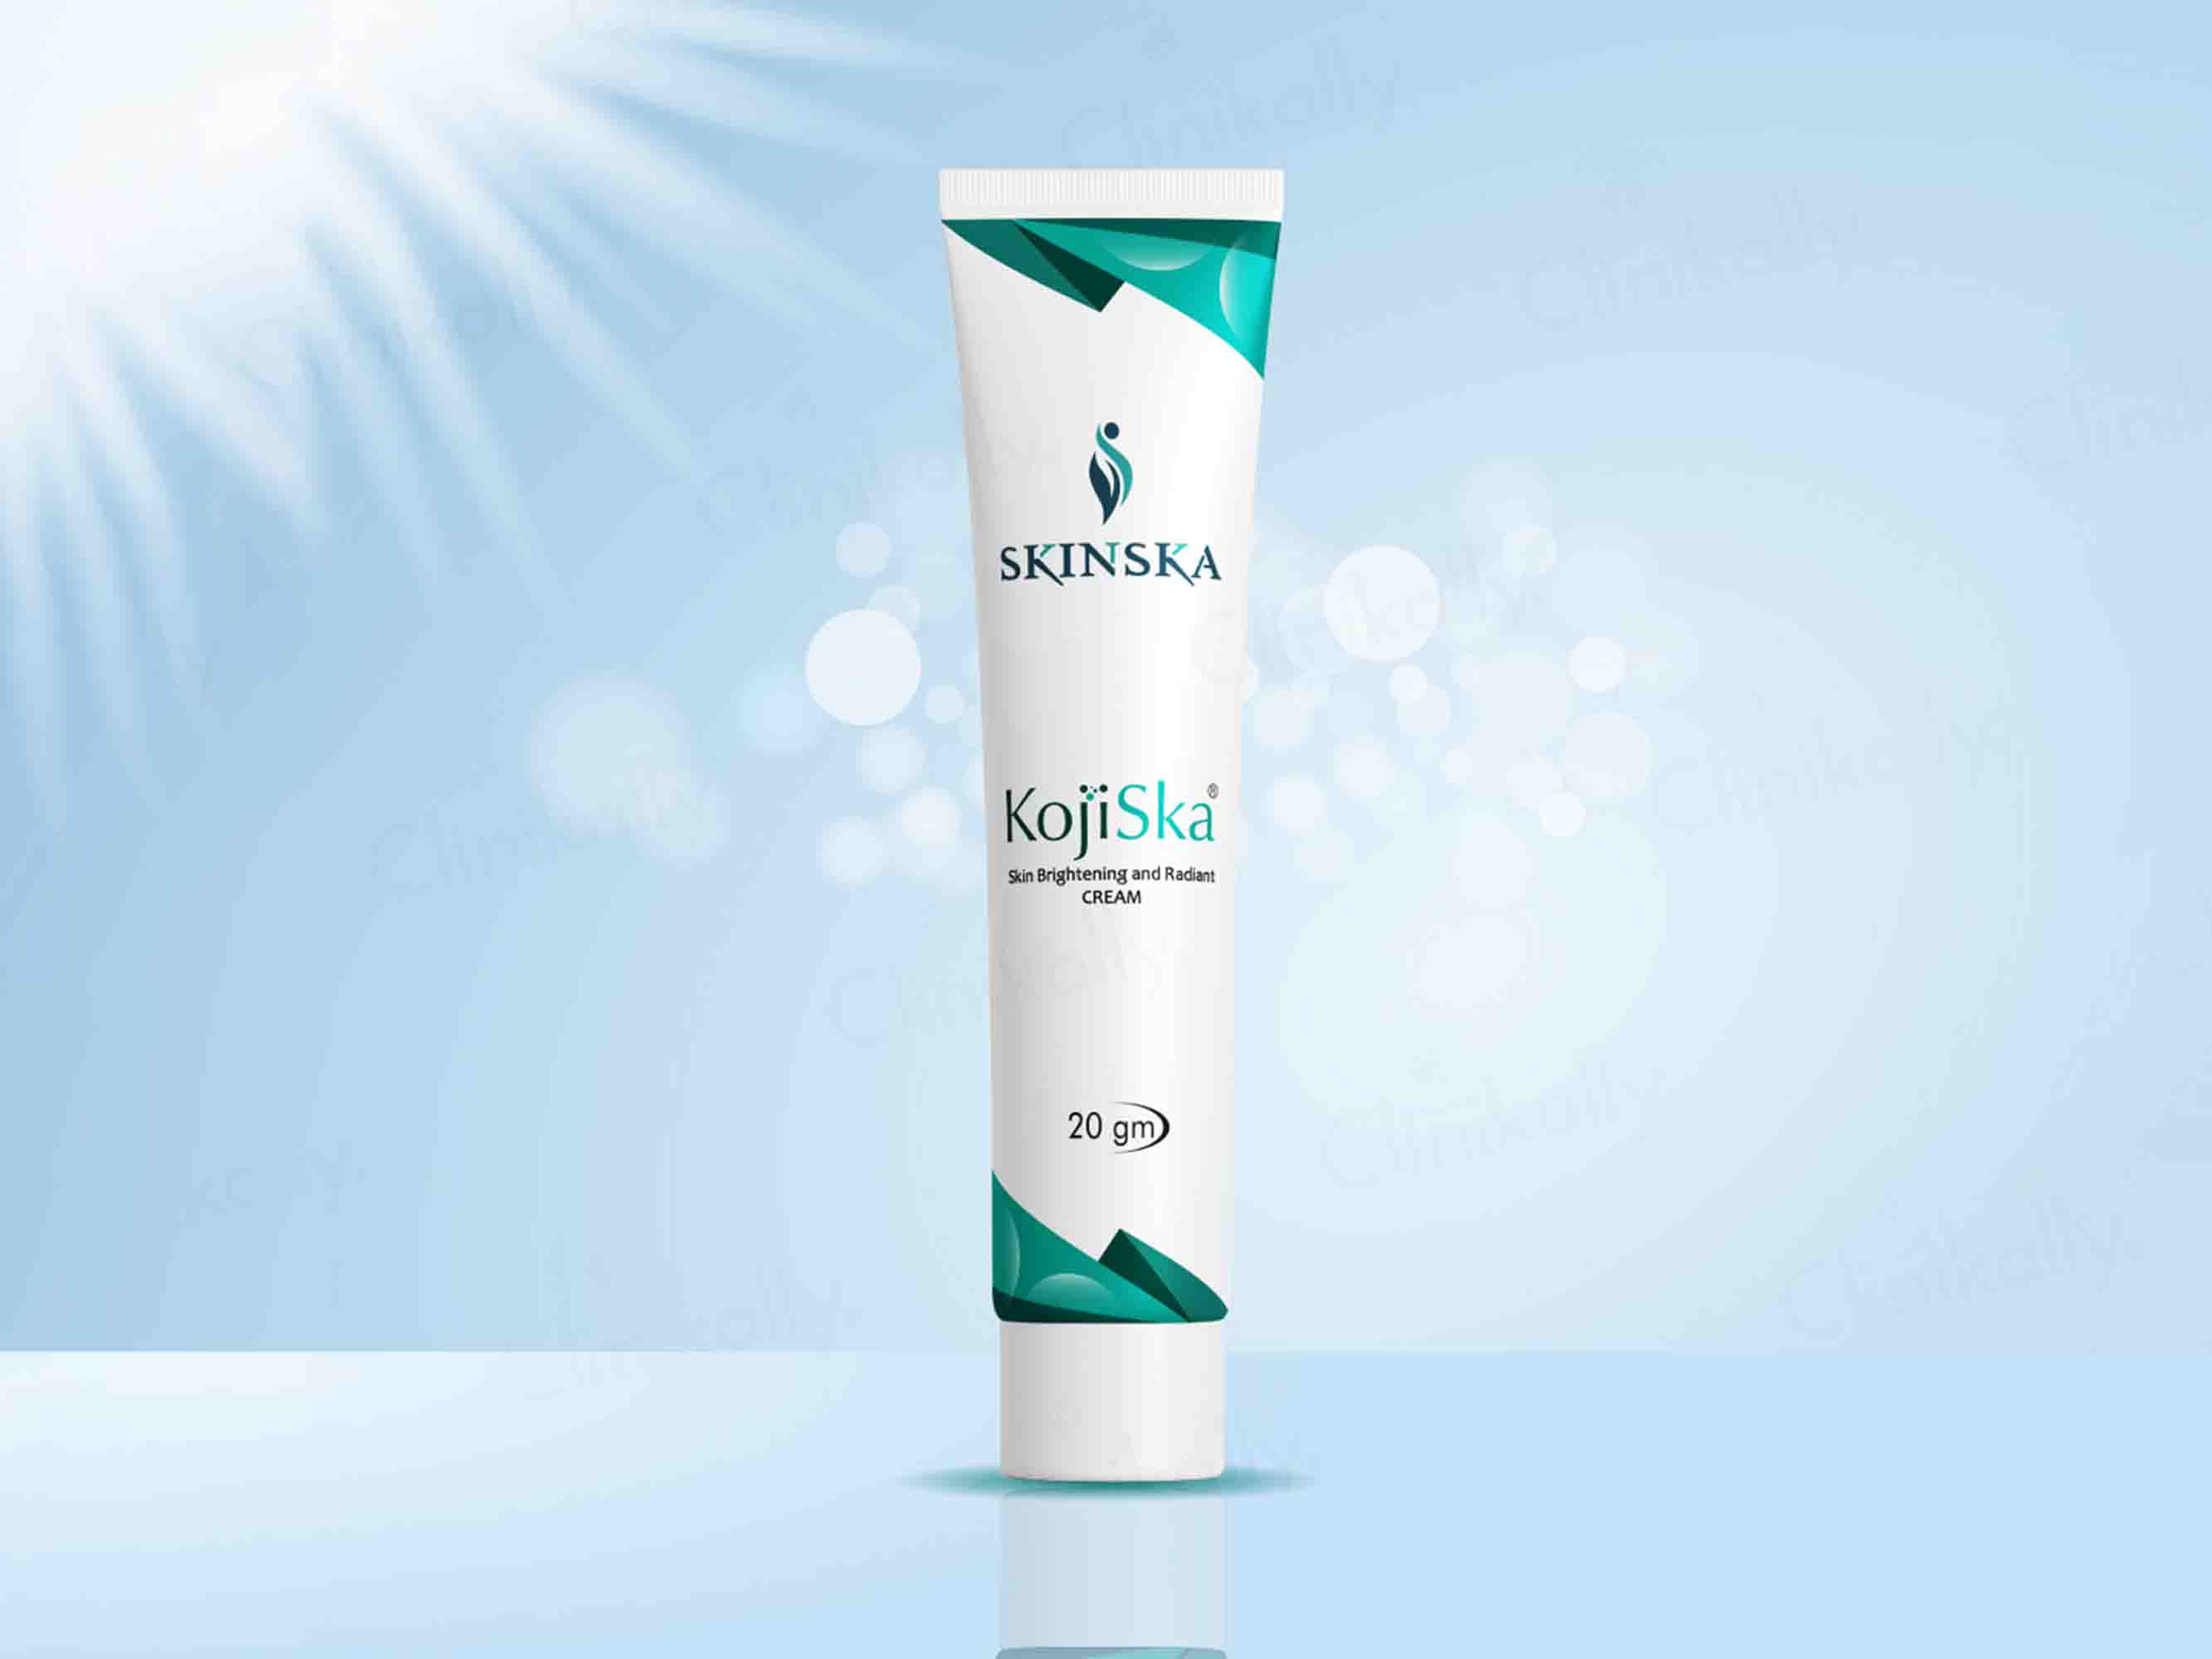 Kojiska Skin Brightening and Radiant Cream - Clinikally